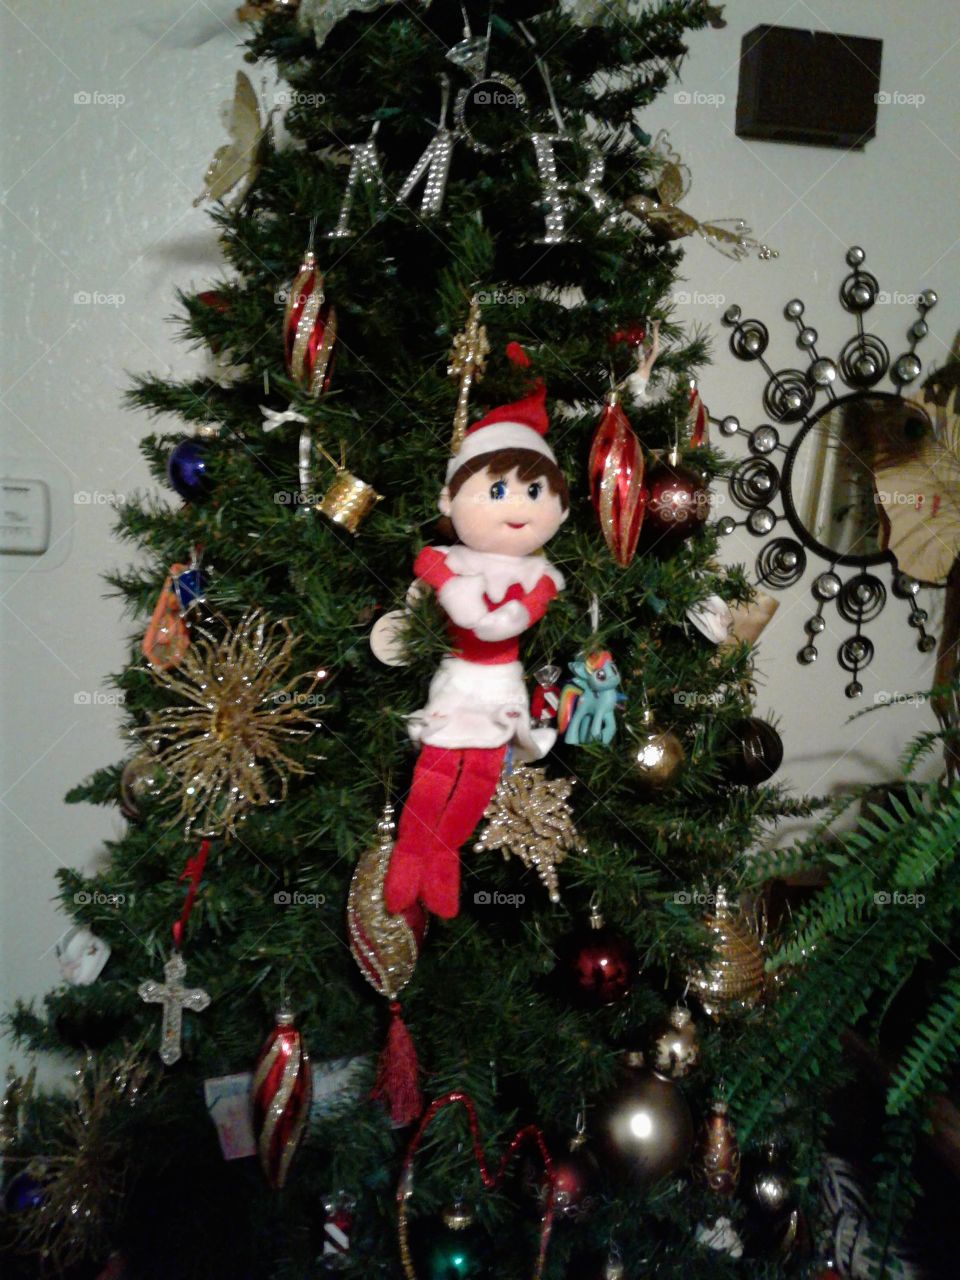 Elf on the shelf, California, Naughty, Christmas, decorations